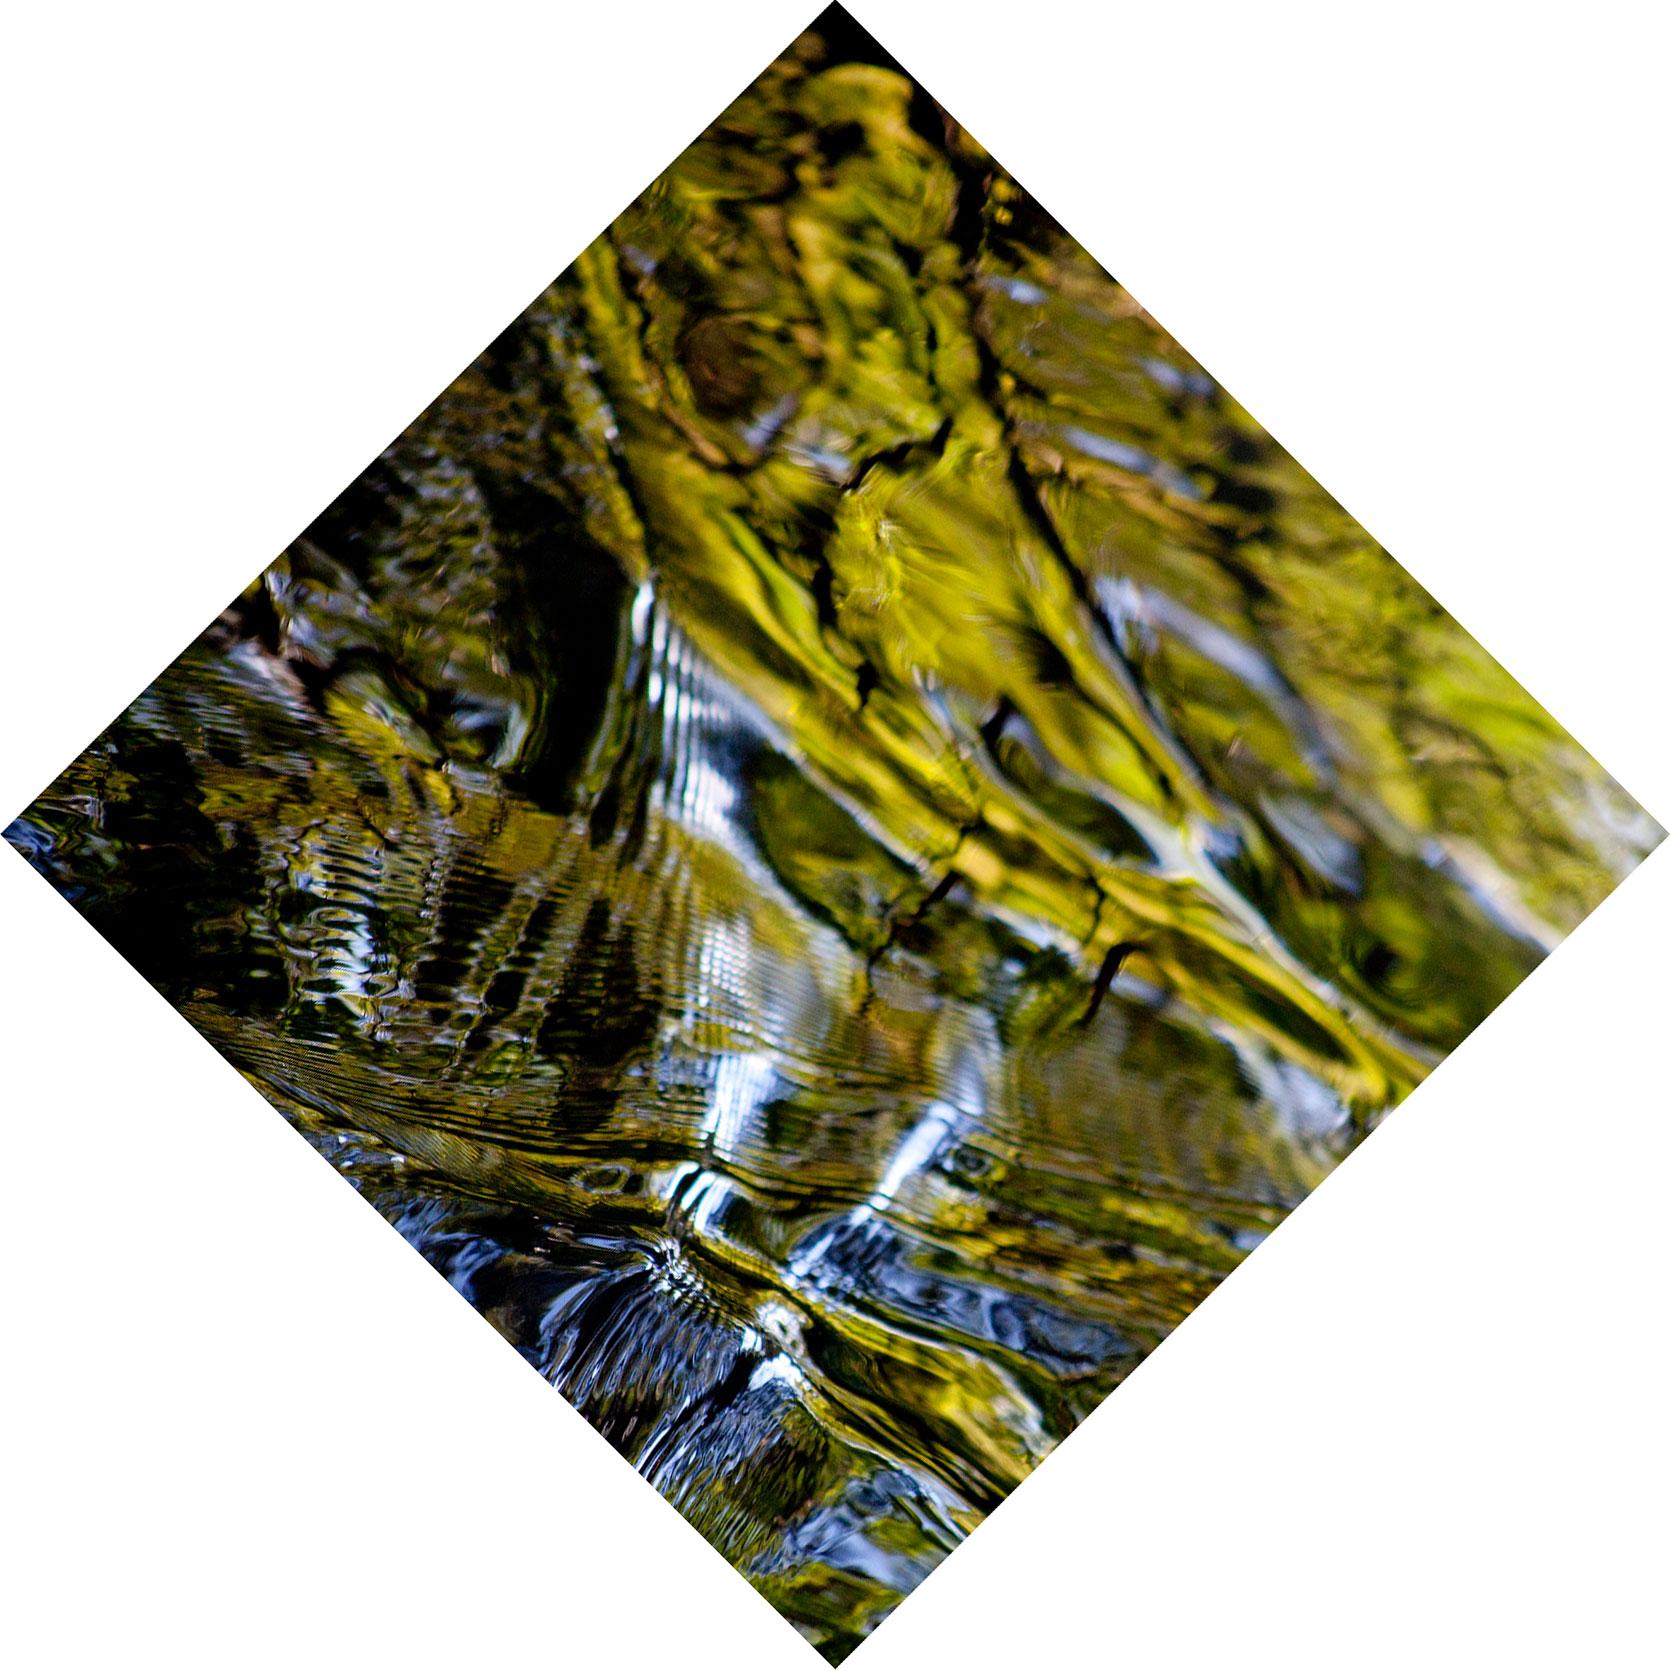 Orlando Azevedo Color Photograph - Cosmica #4, 4 Elements, Water